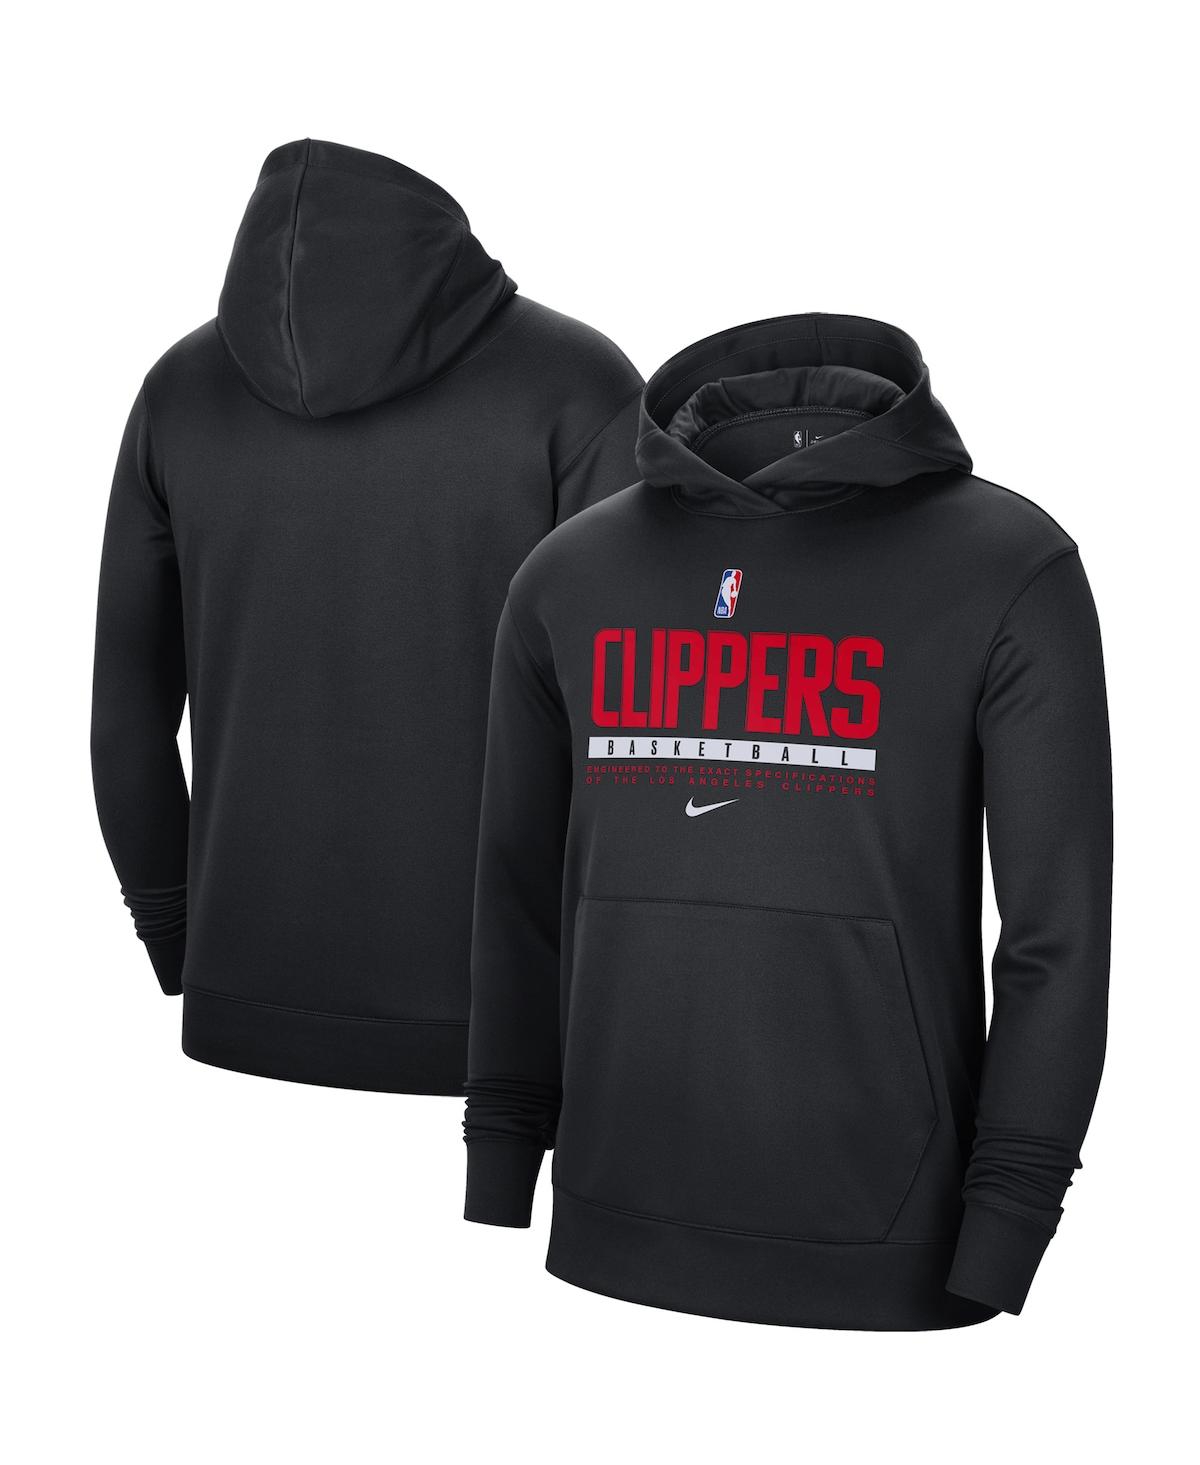 Men's Nike Black La Clippers Spotlight On Court Practice Performance Pullover Hoodie